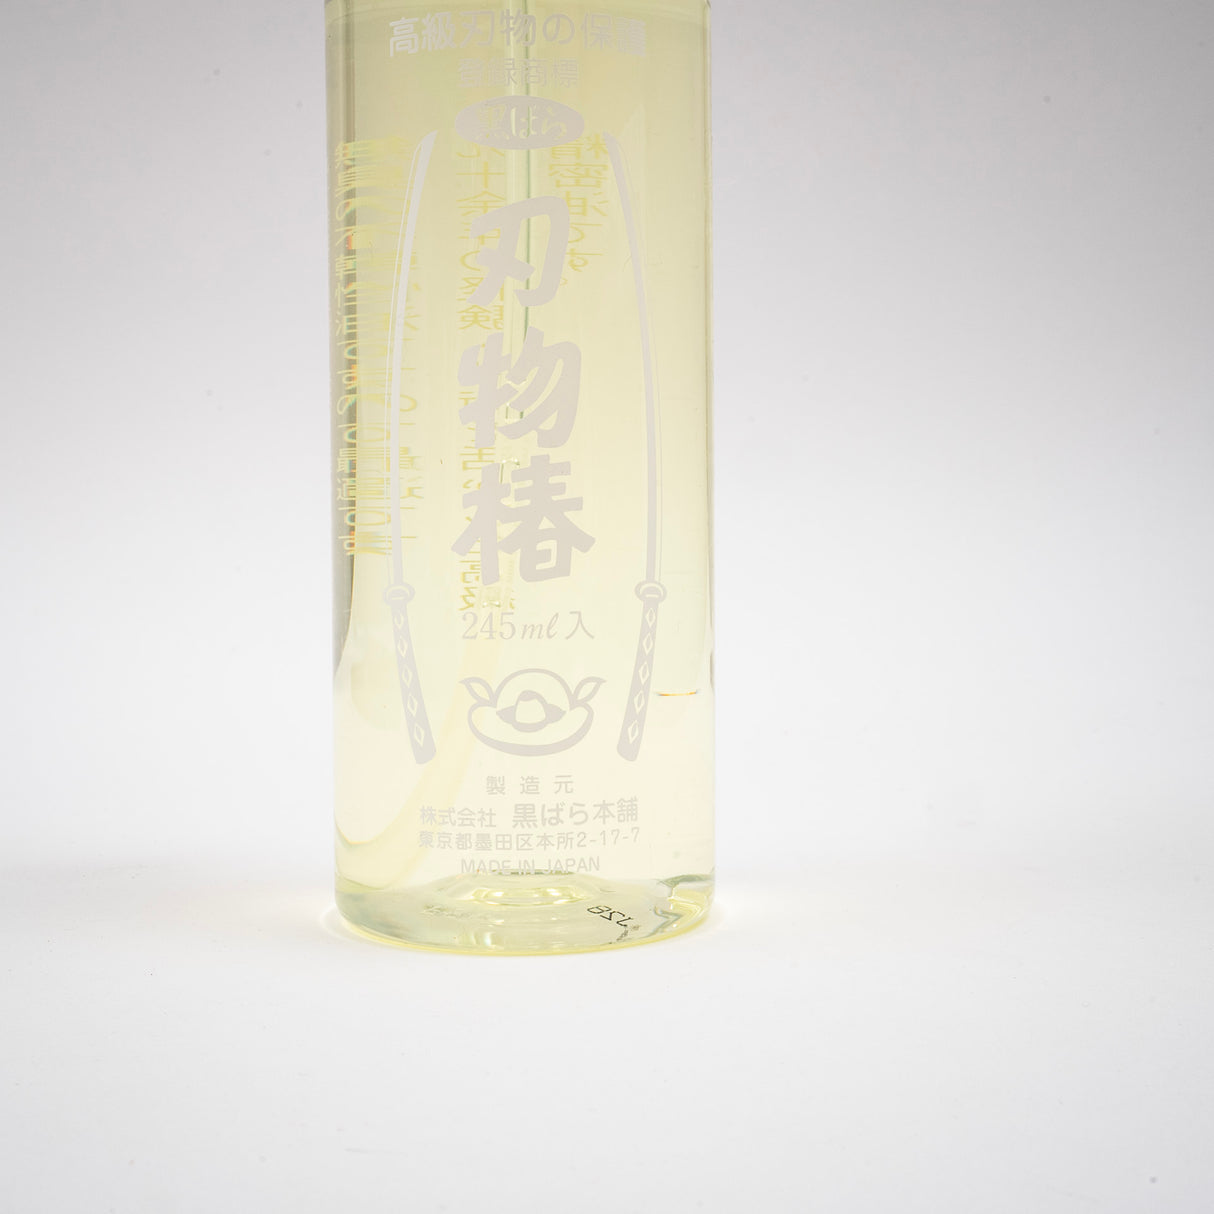 Japanese Tsubaki / Camellia Oil 100ml / 245ml